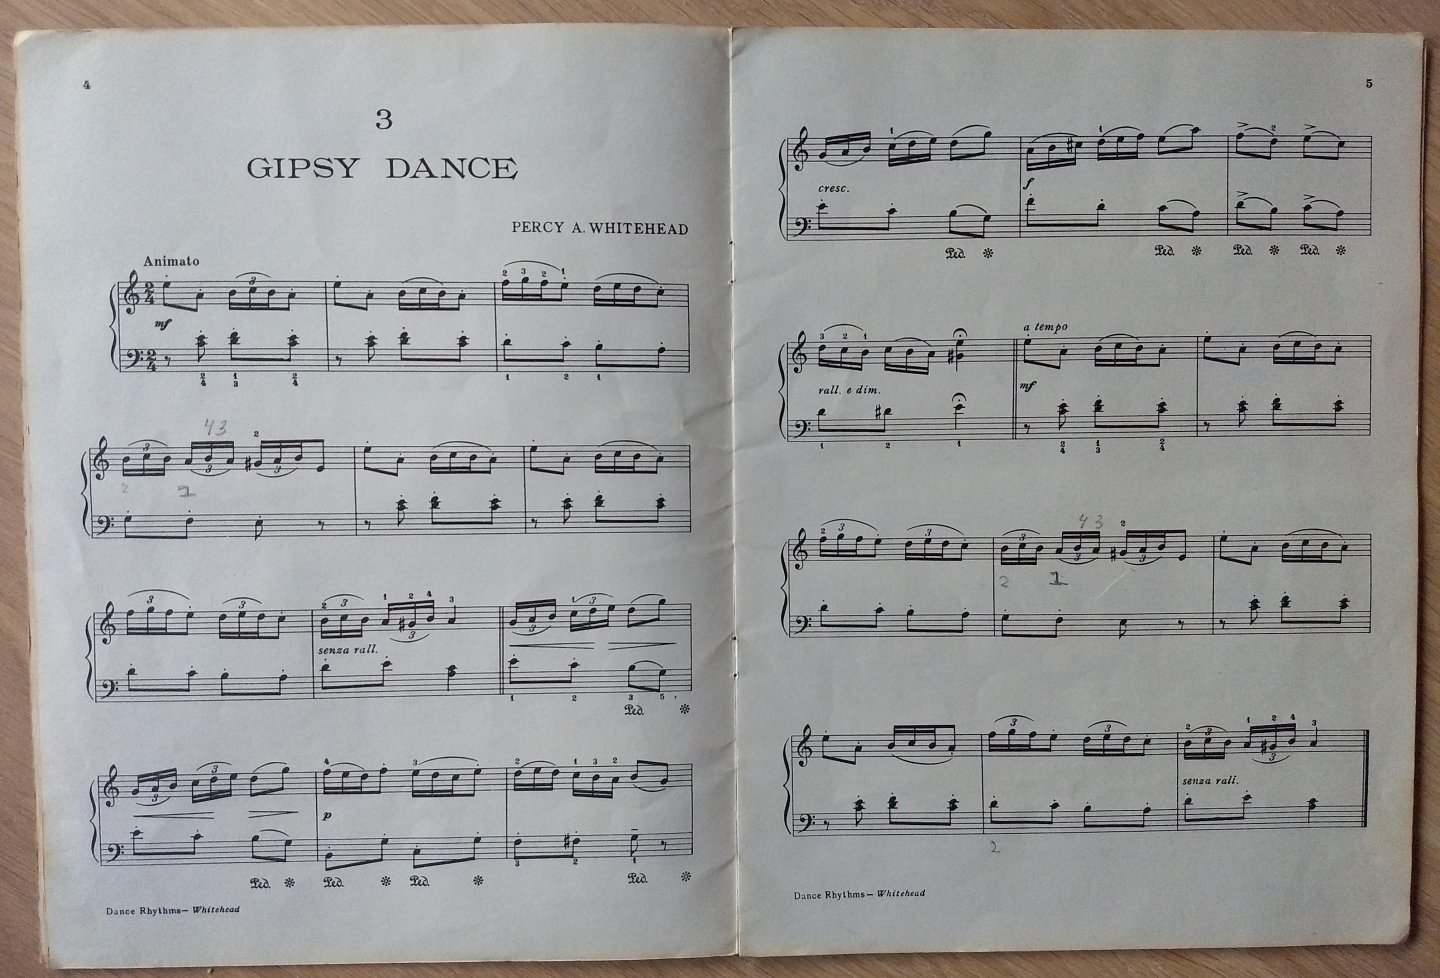 Whitehead, Percy A - DANCE RHYTHMS - FOR PIANO